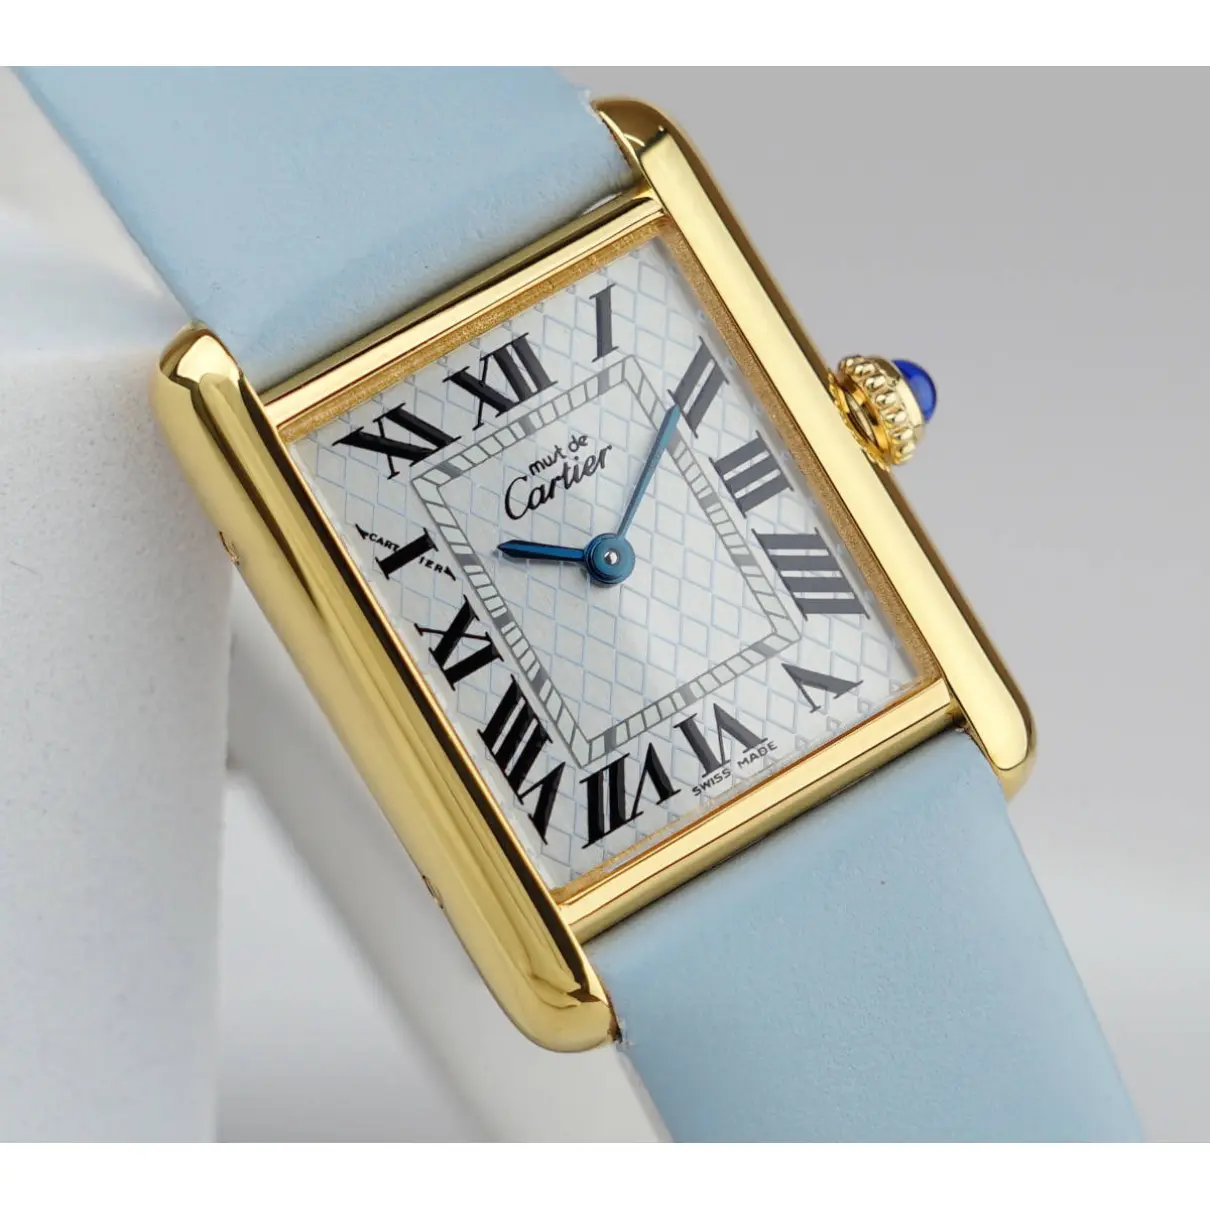 Buy Cartier Tank Must silver gilt watch online